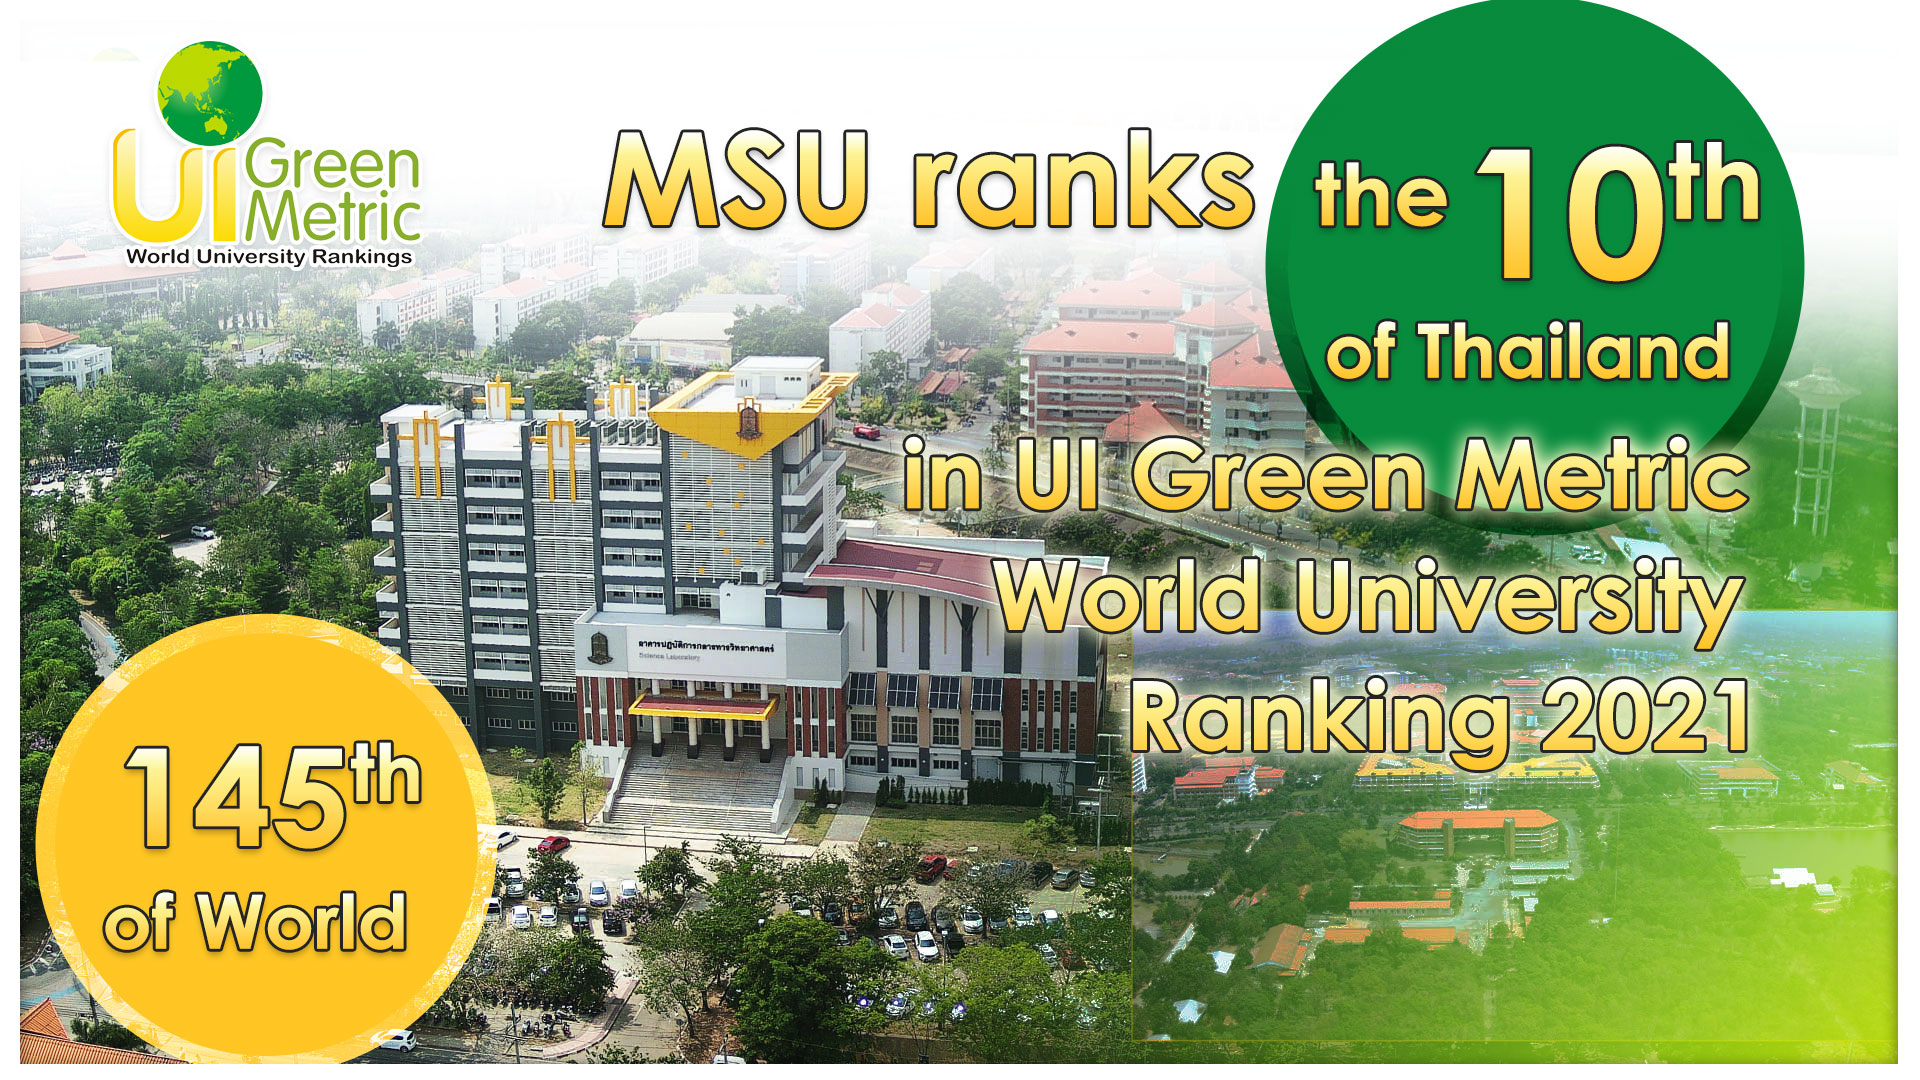 MSU ranks the 10th of Thailand in UI Green Metric World University Ranking 2021